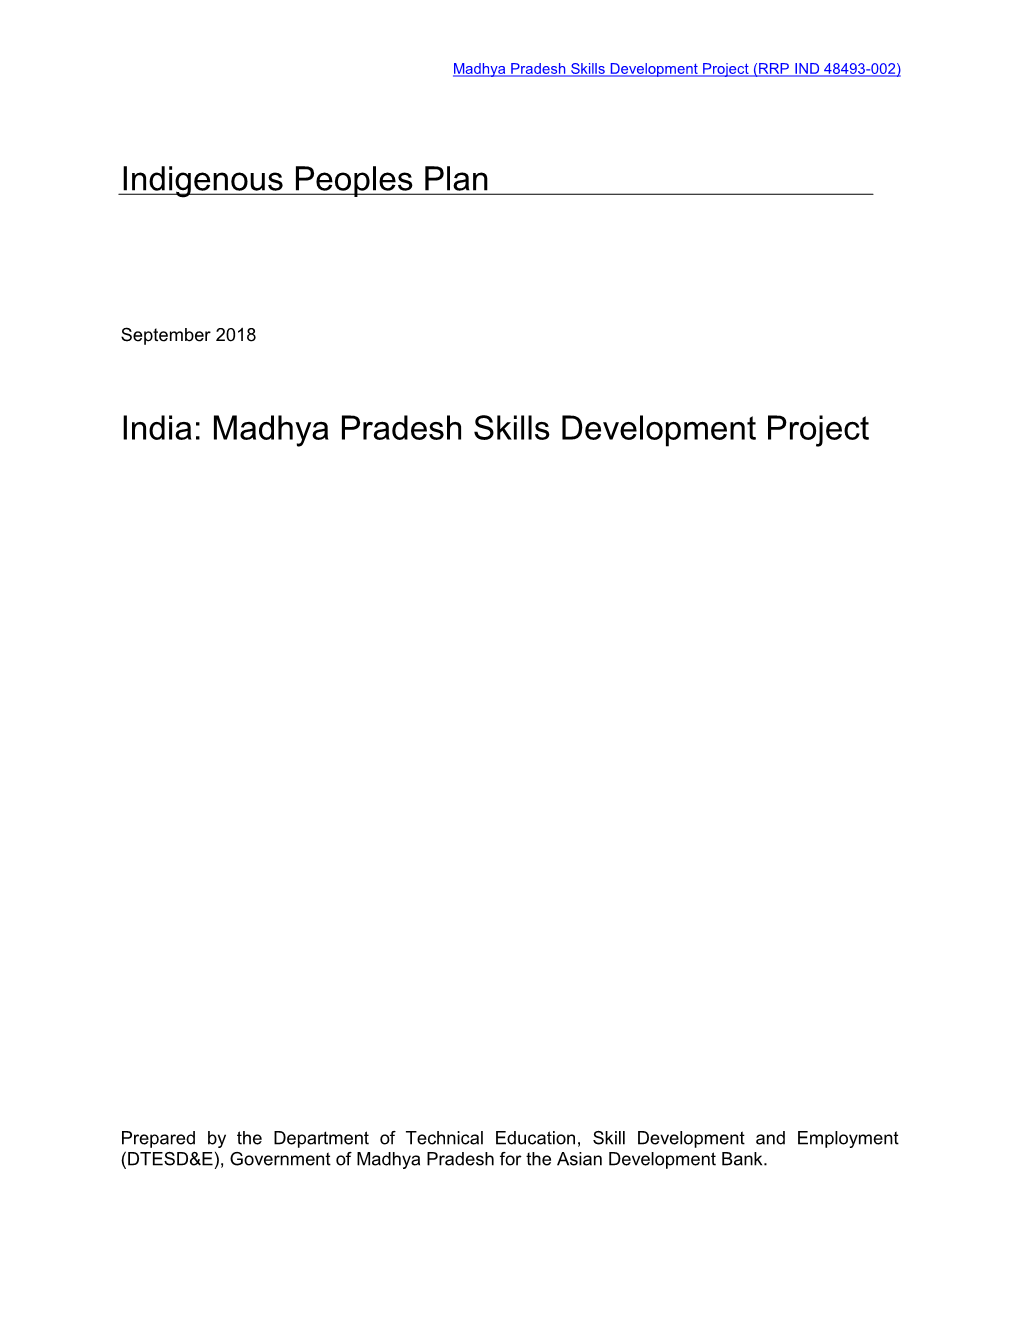 Madhya Pradesh Skills Development Project: Indigenous Peoples Plan